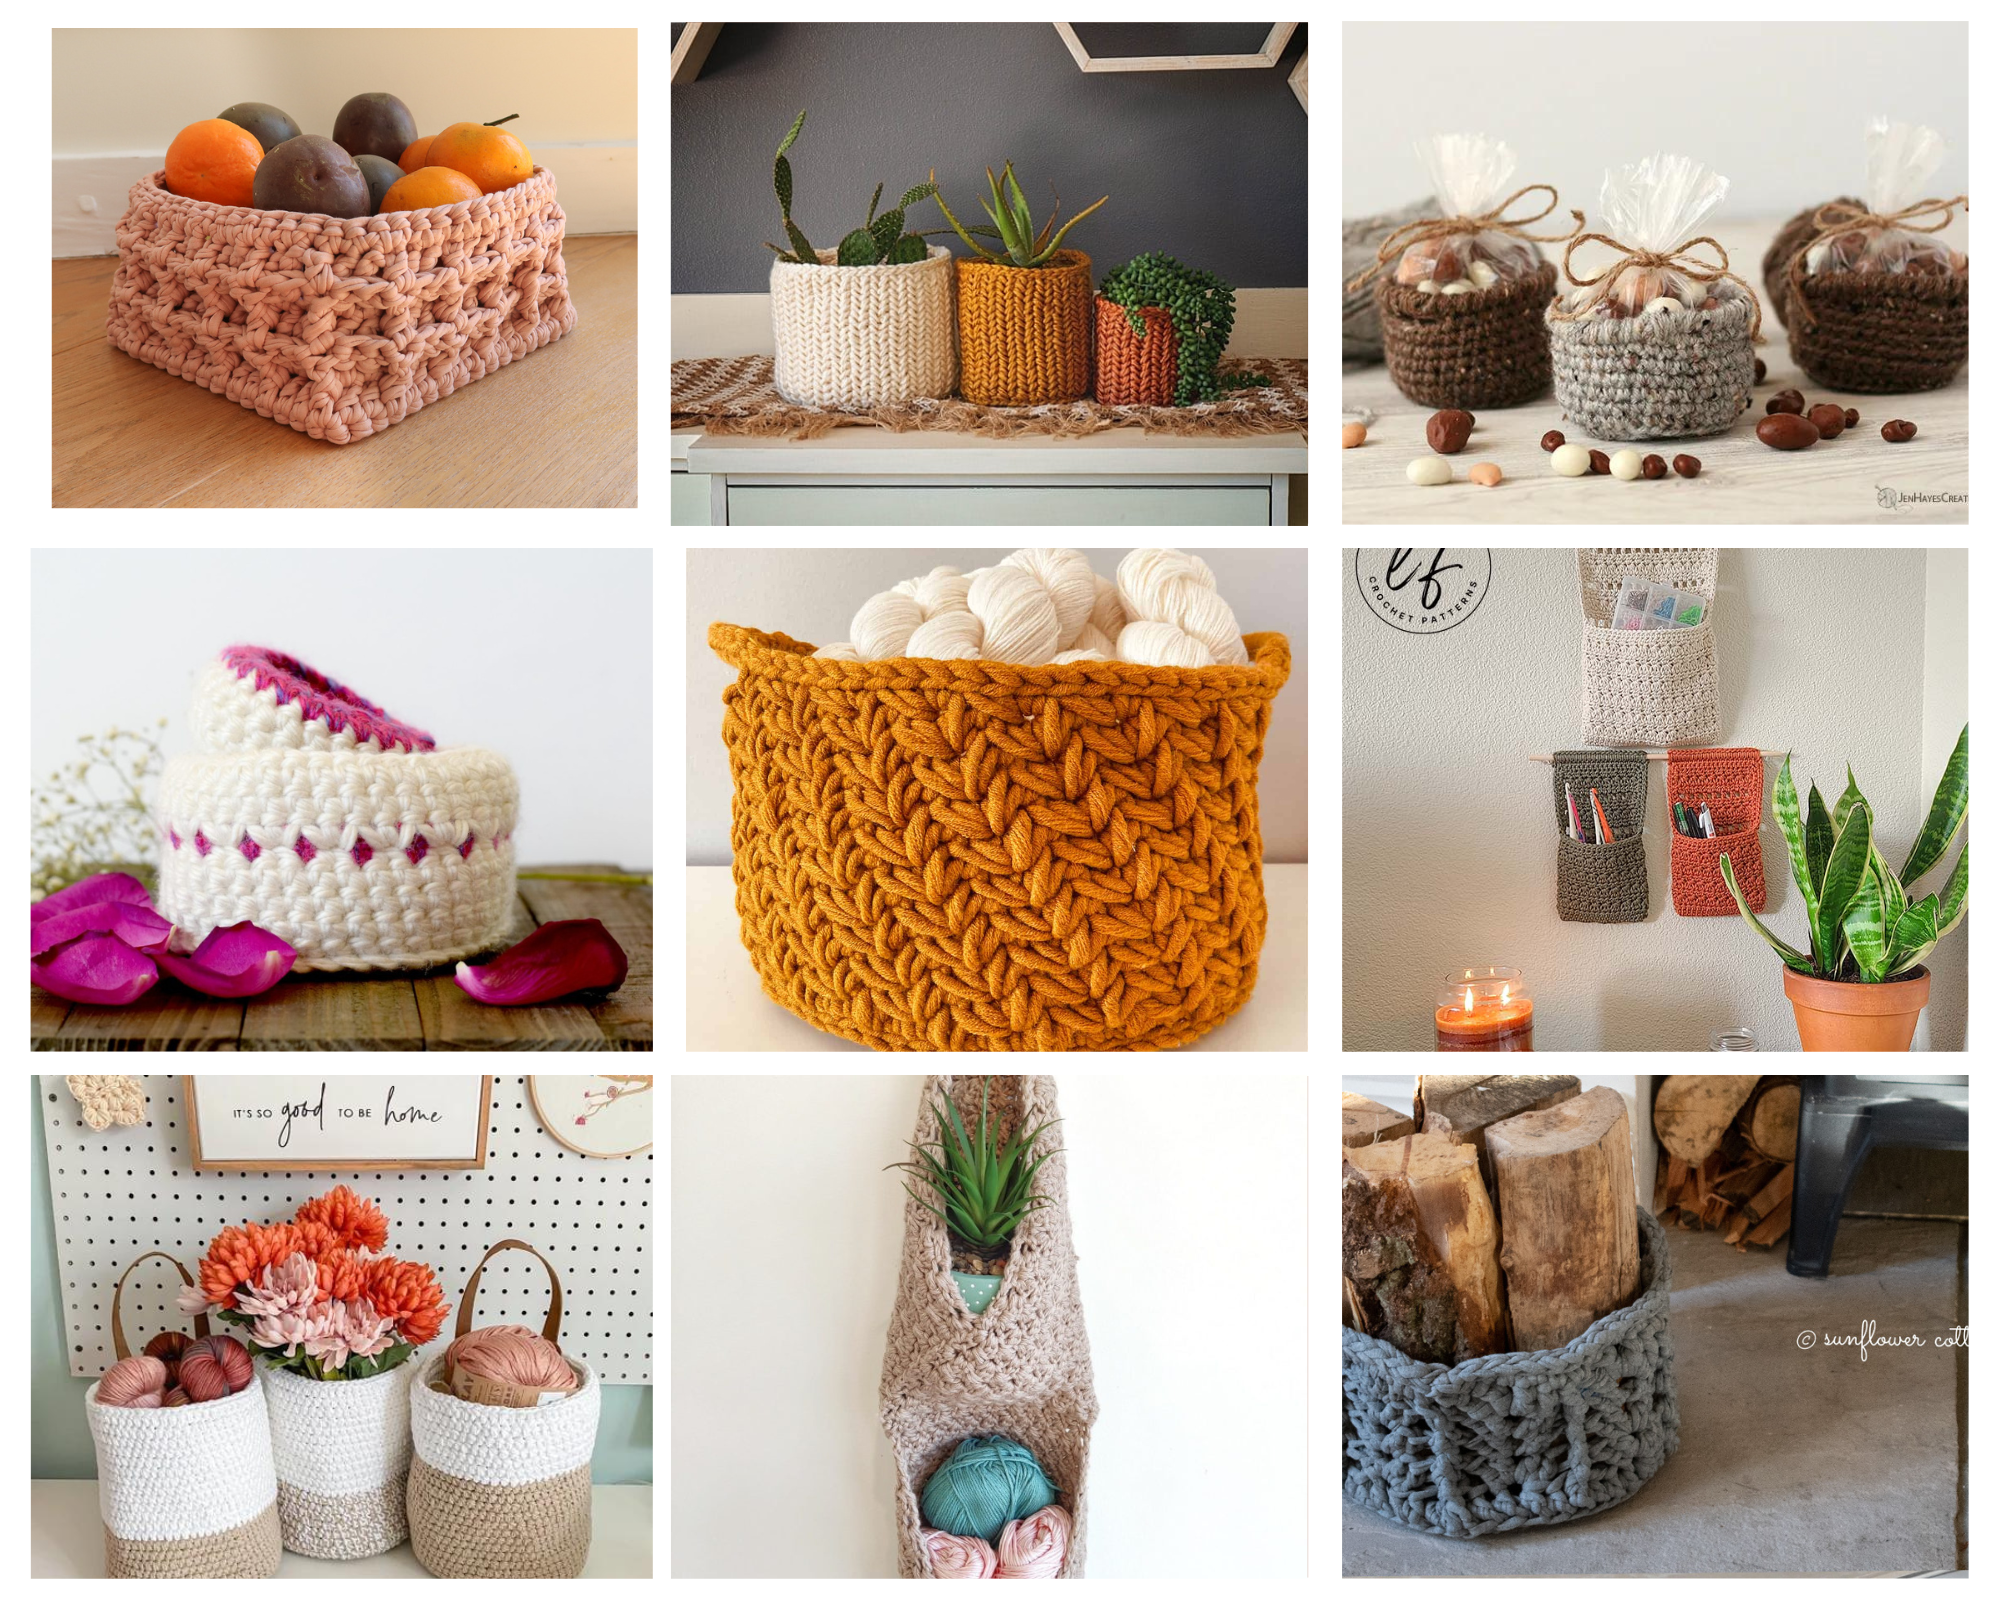 Decorative Fabric Storage Baskets in 18 Patterns